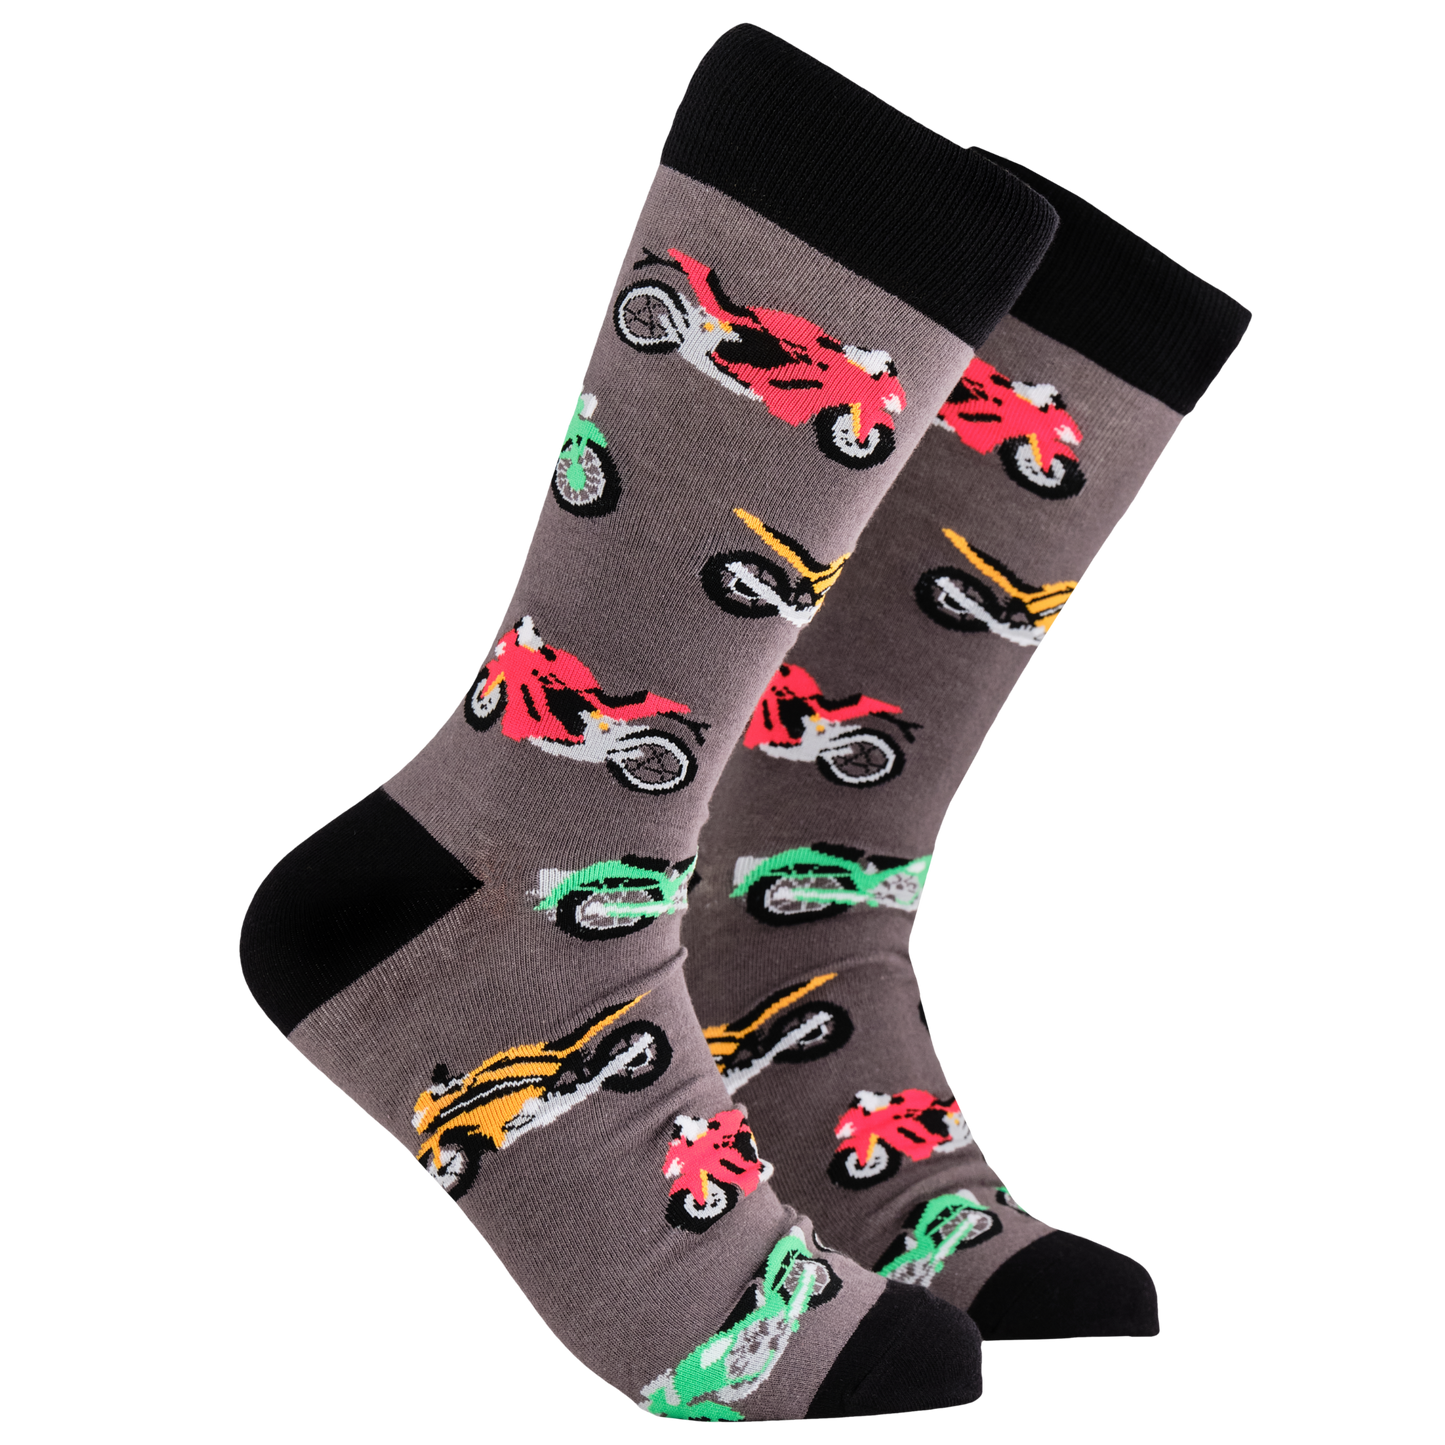 Motorbike Socks - Va Va Voom. A pair of socks depicting different coloured racing bikes. Grey legs, black cuff, heel and toe.